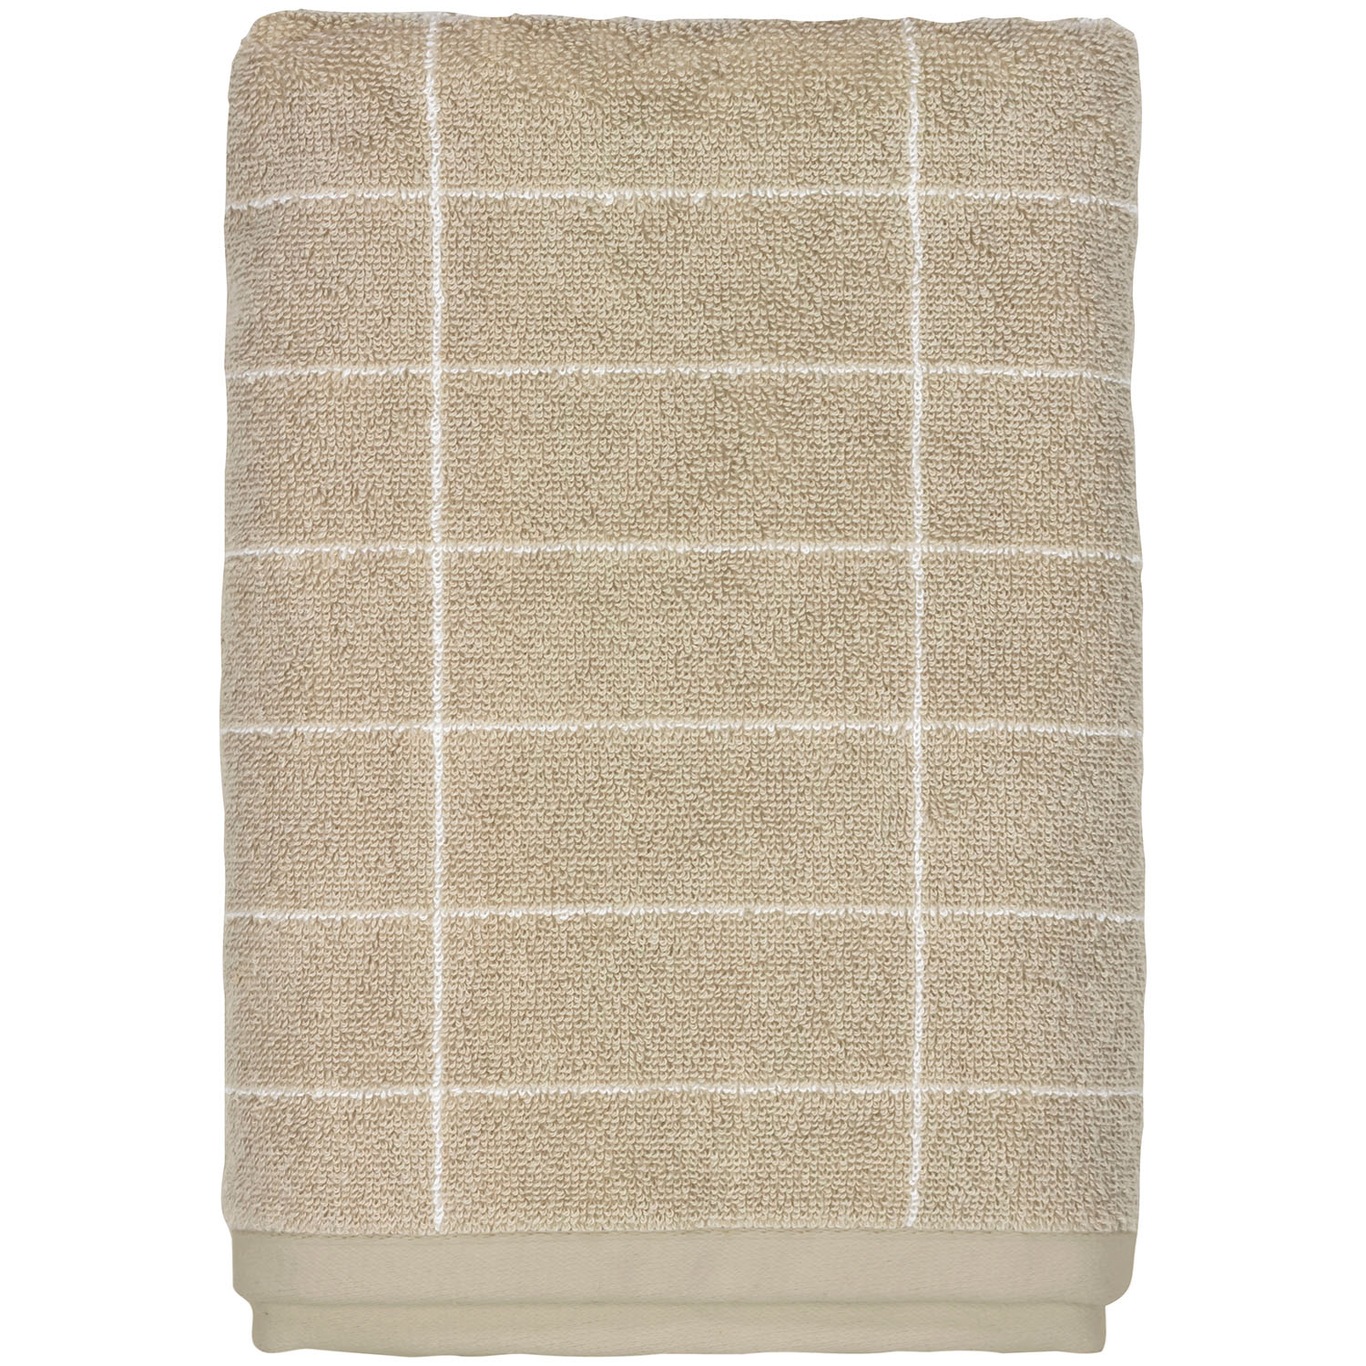 Tile Towel Sand 2-pack, 38x60 cm